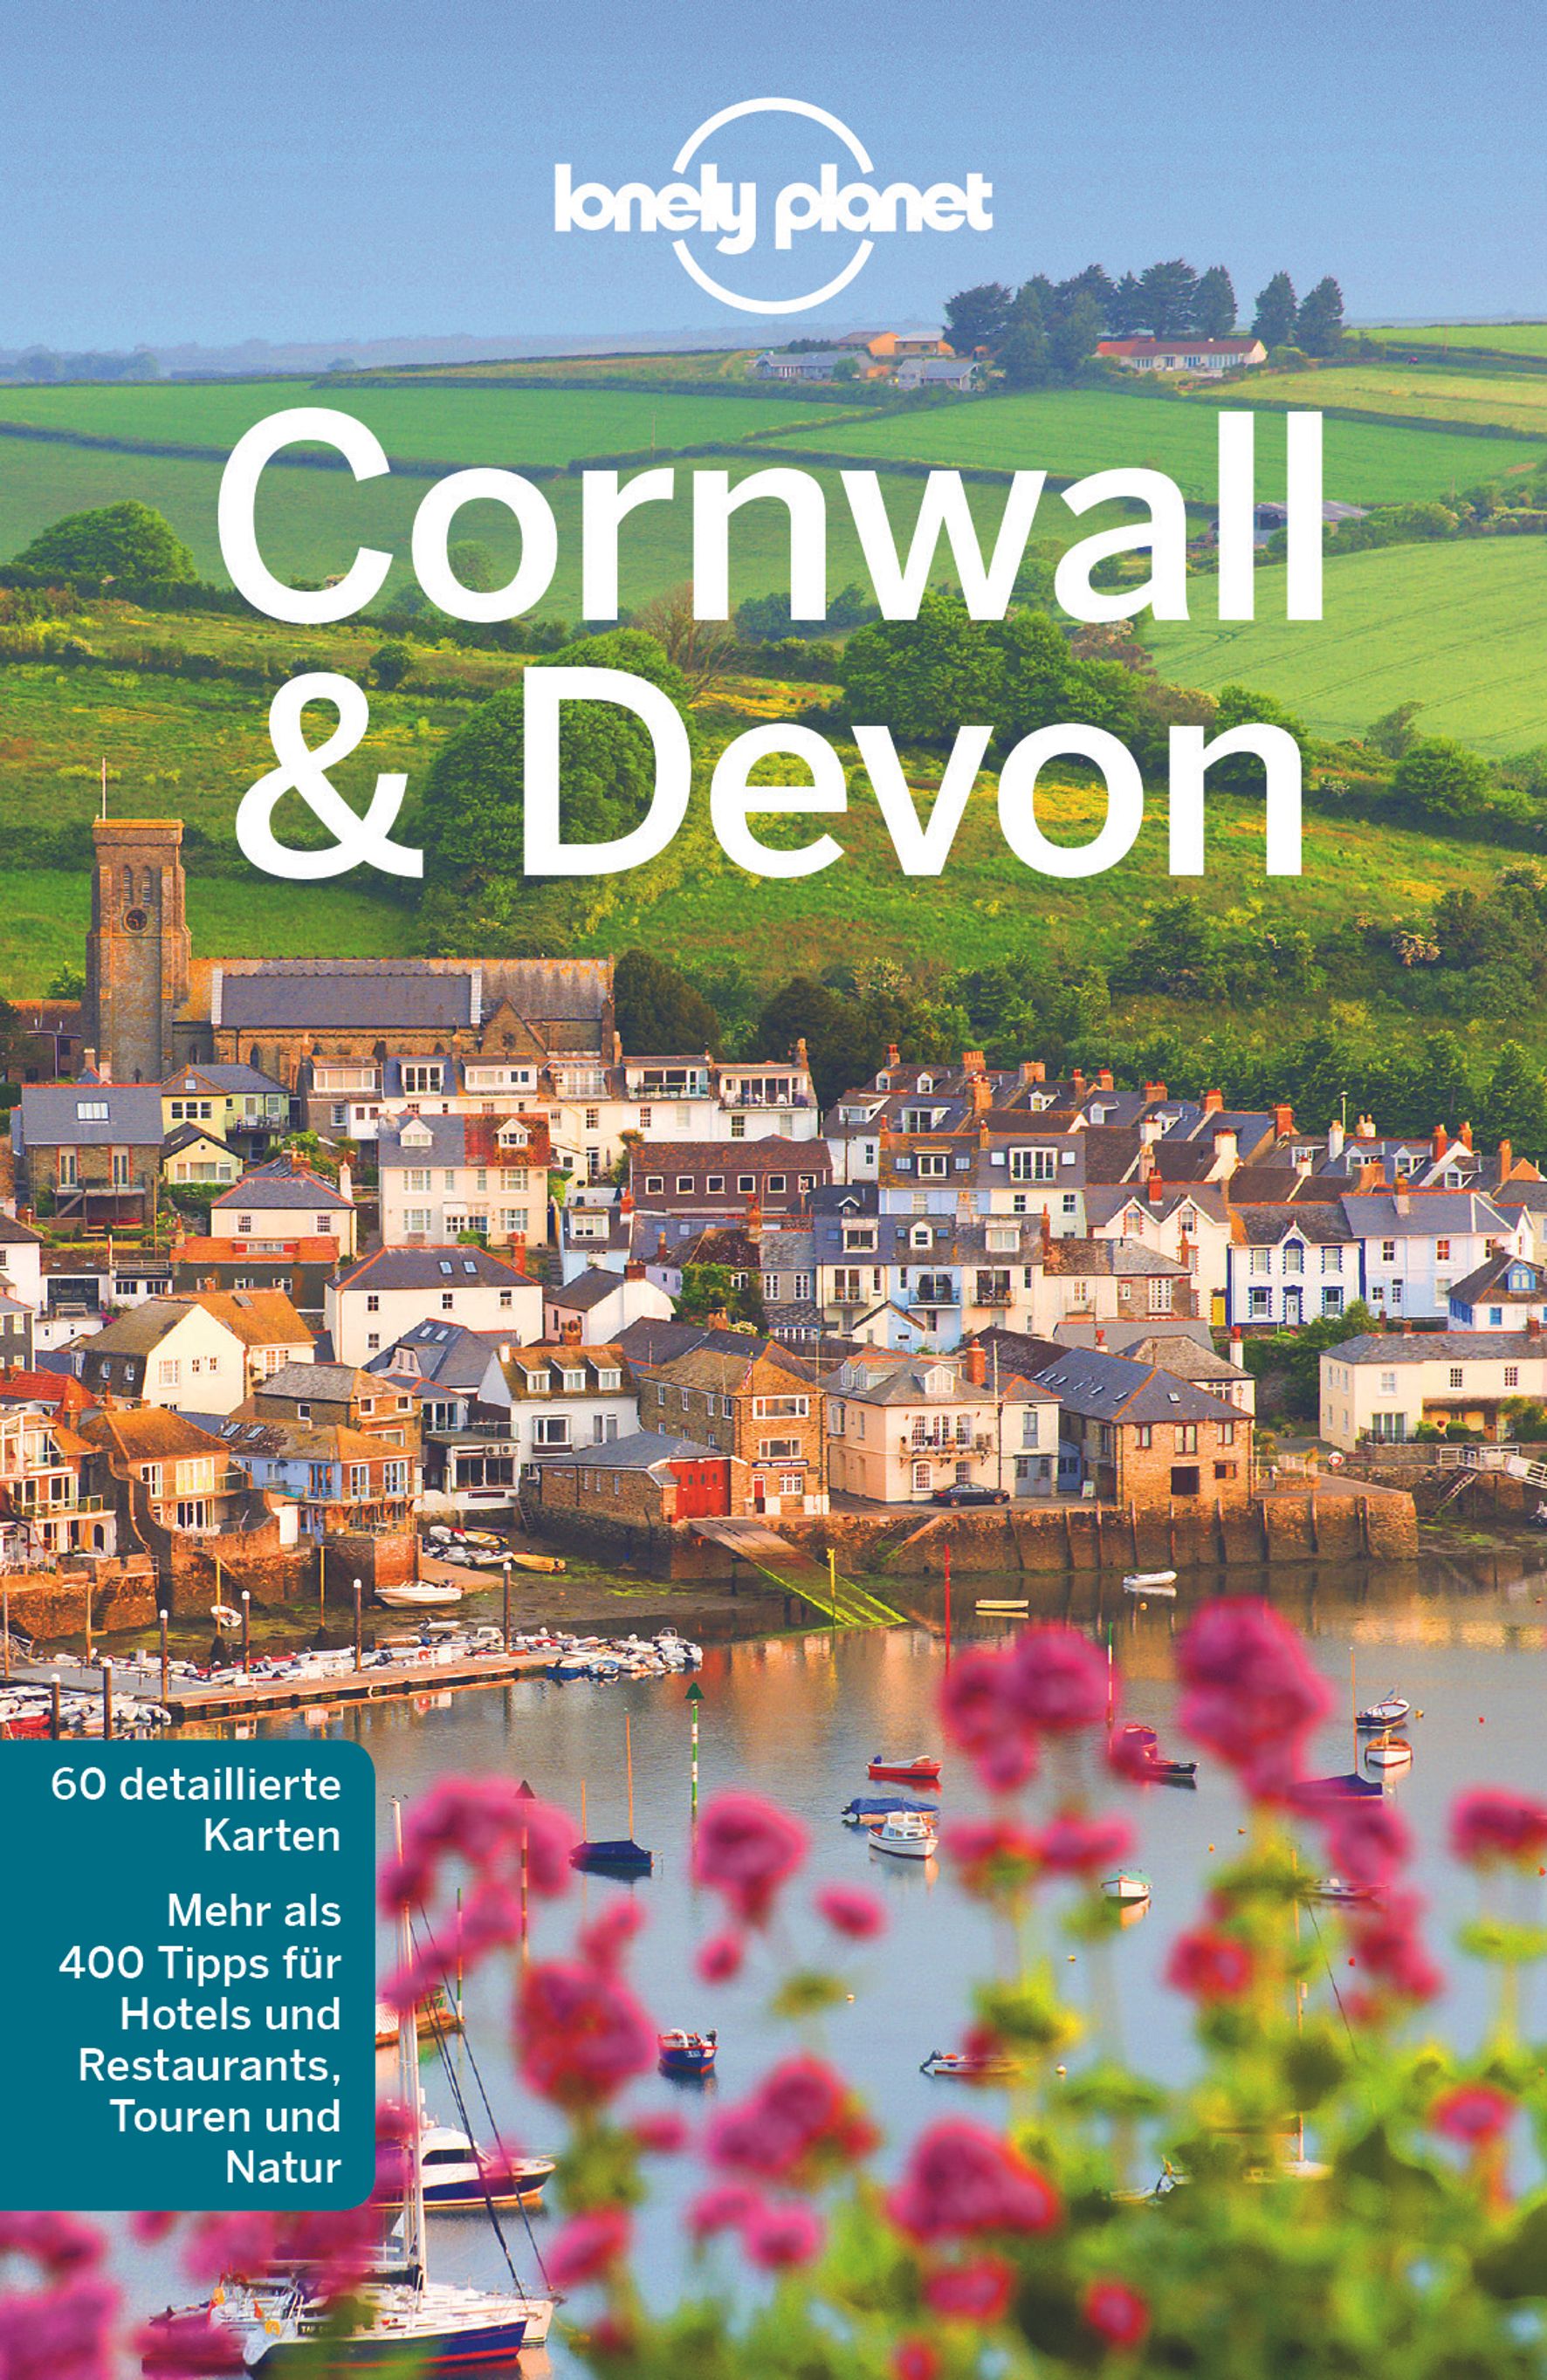 Lonely Planet Cornwall & Devon